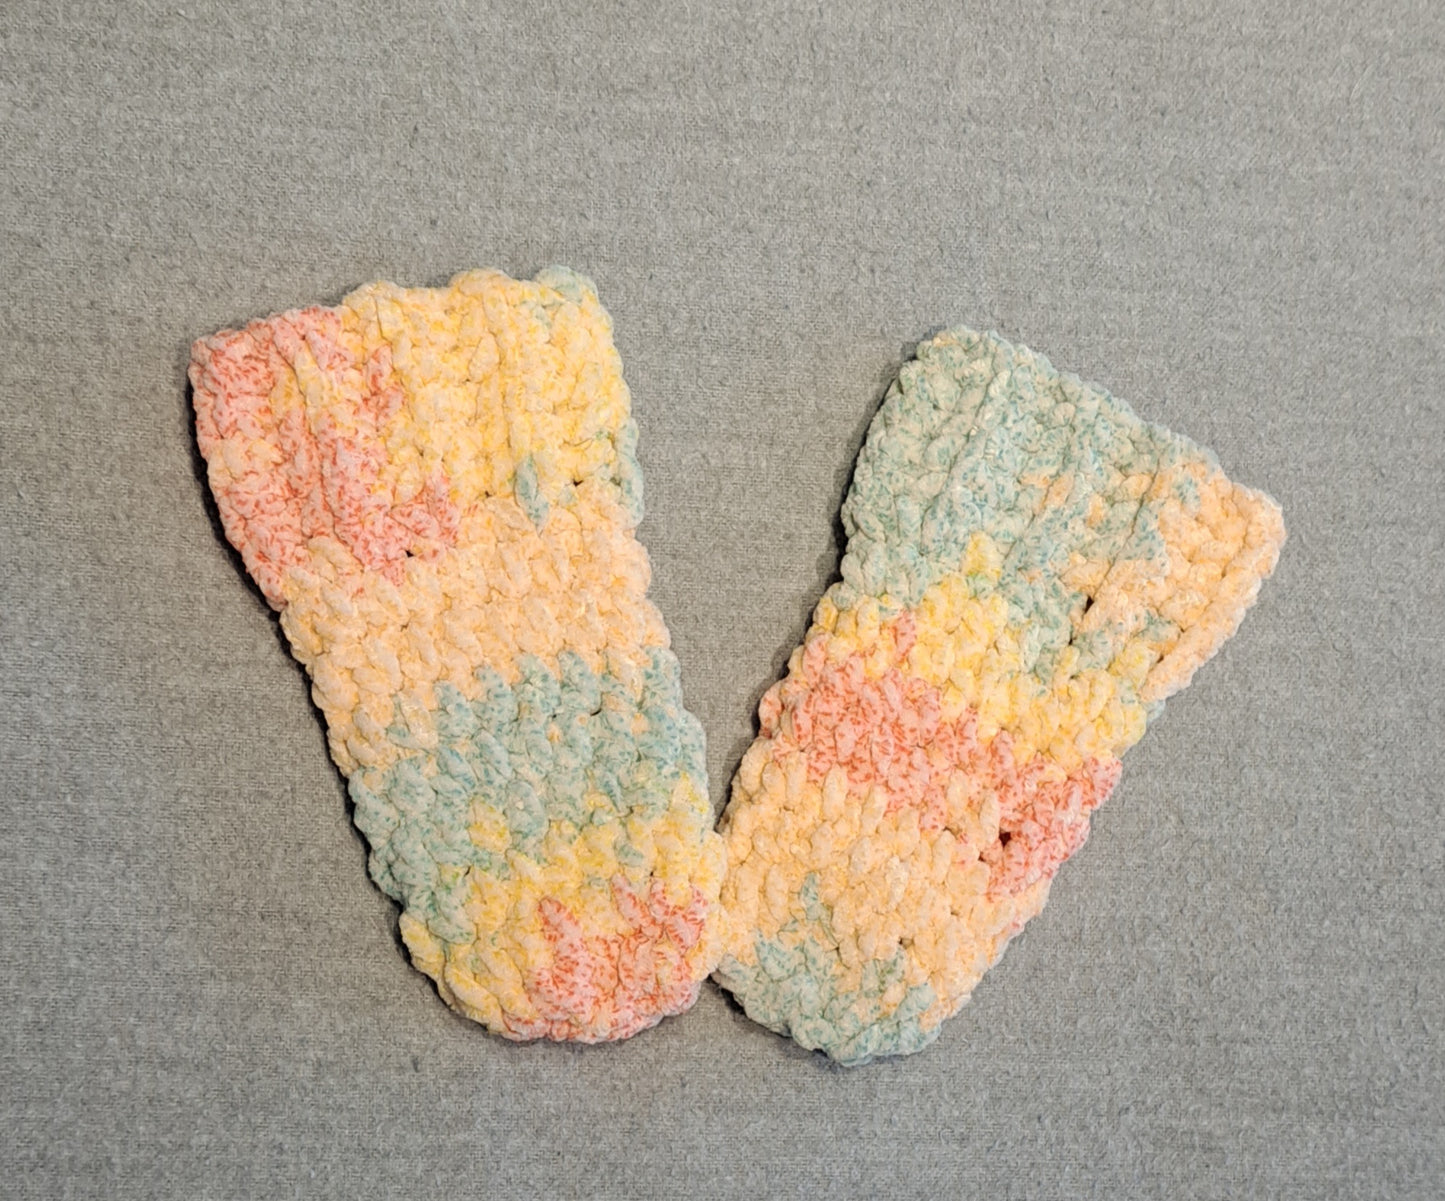 Crochet baby mittens